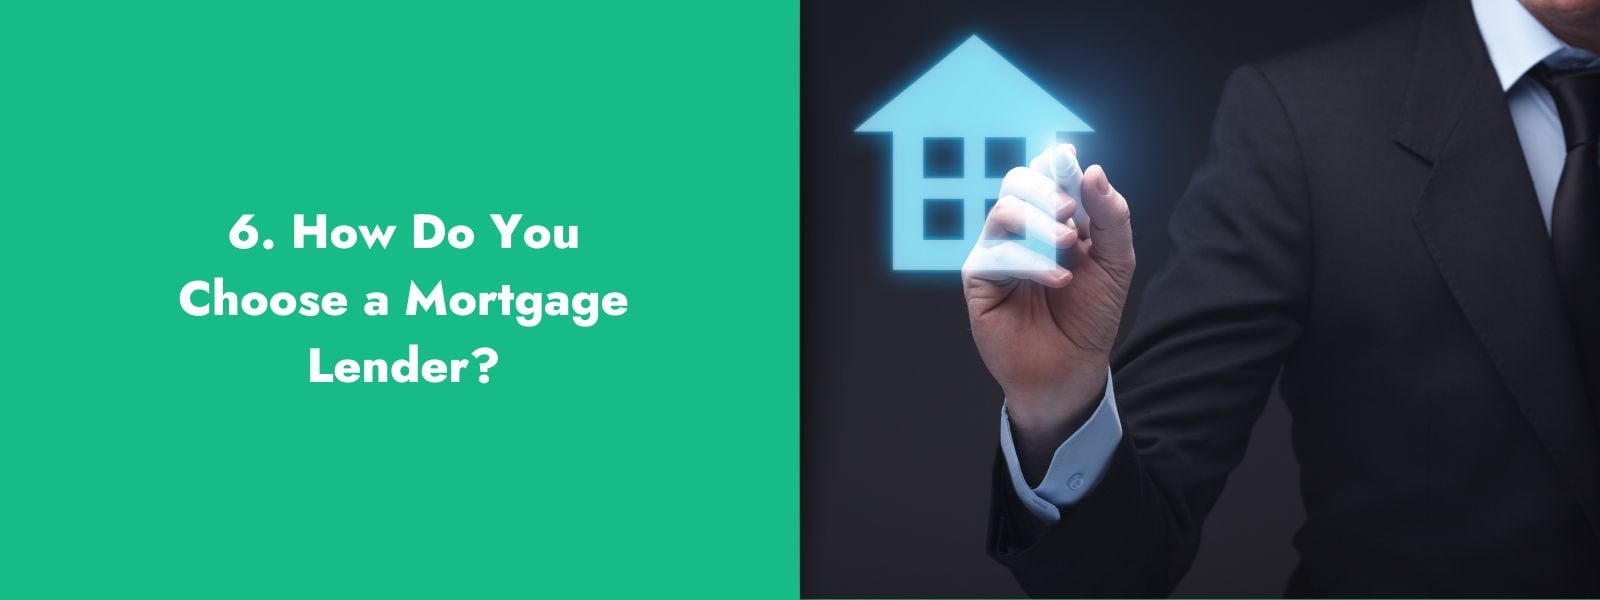 6. How Do You Choose a Mortgage Lender